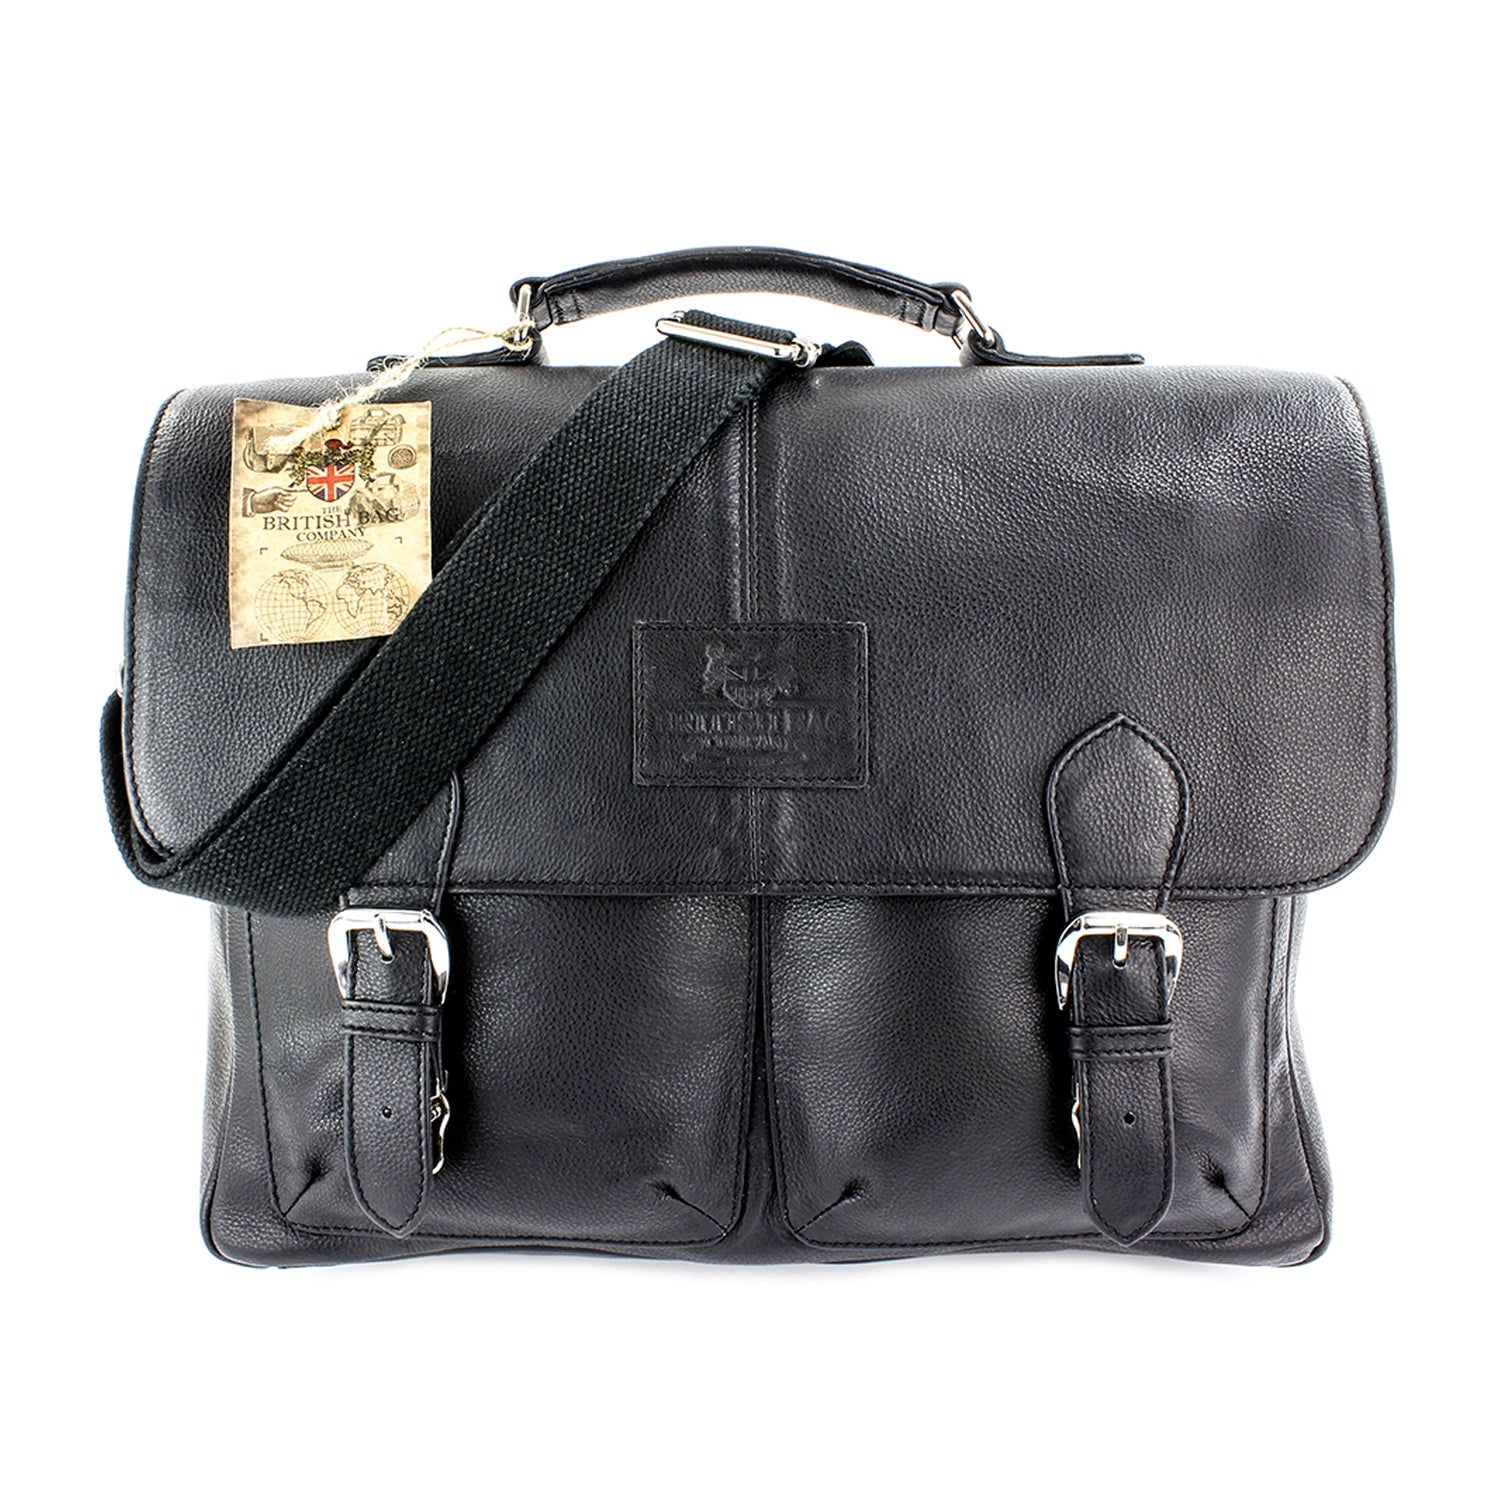 British Bag Co. Black Pebble Grain Leather Briefcase